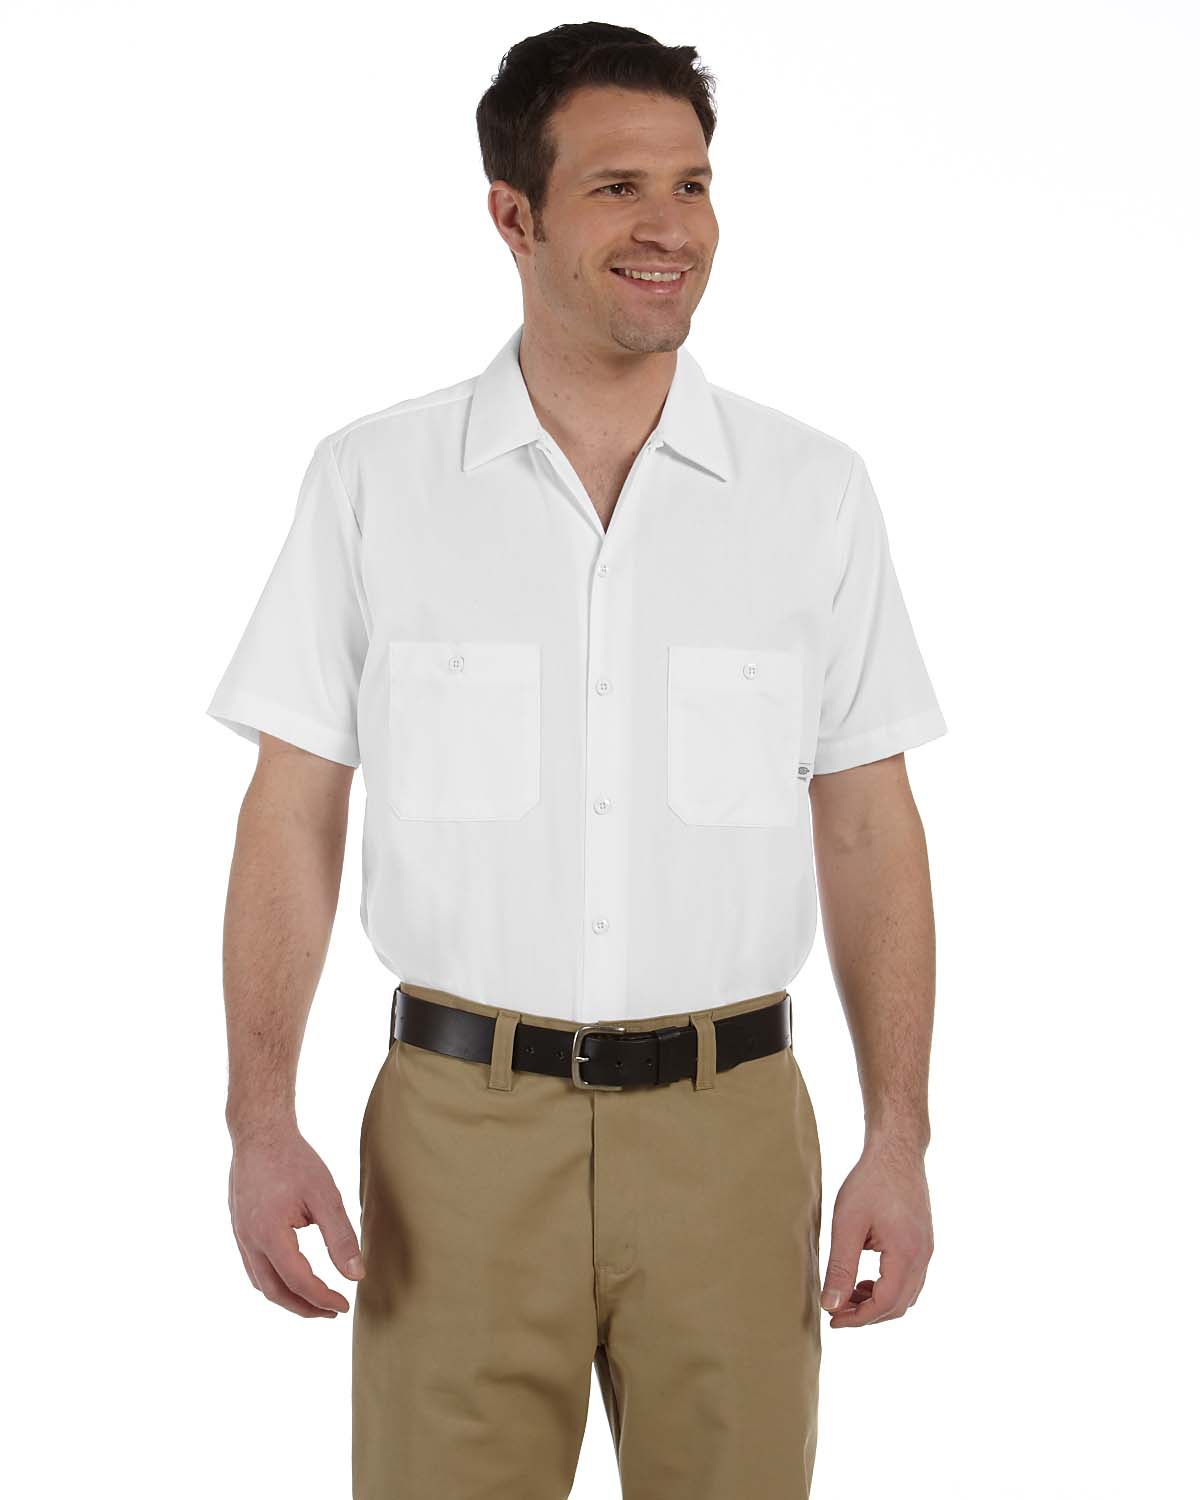 Dickies Occupational LS535 - Short Sleeve Poplin Work Shirt